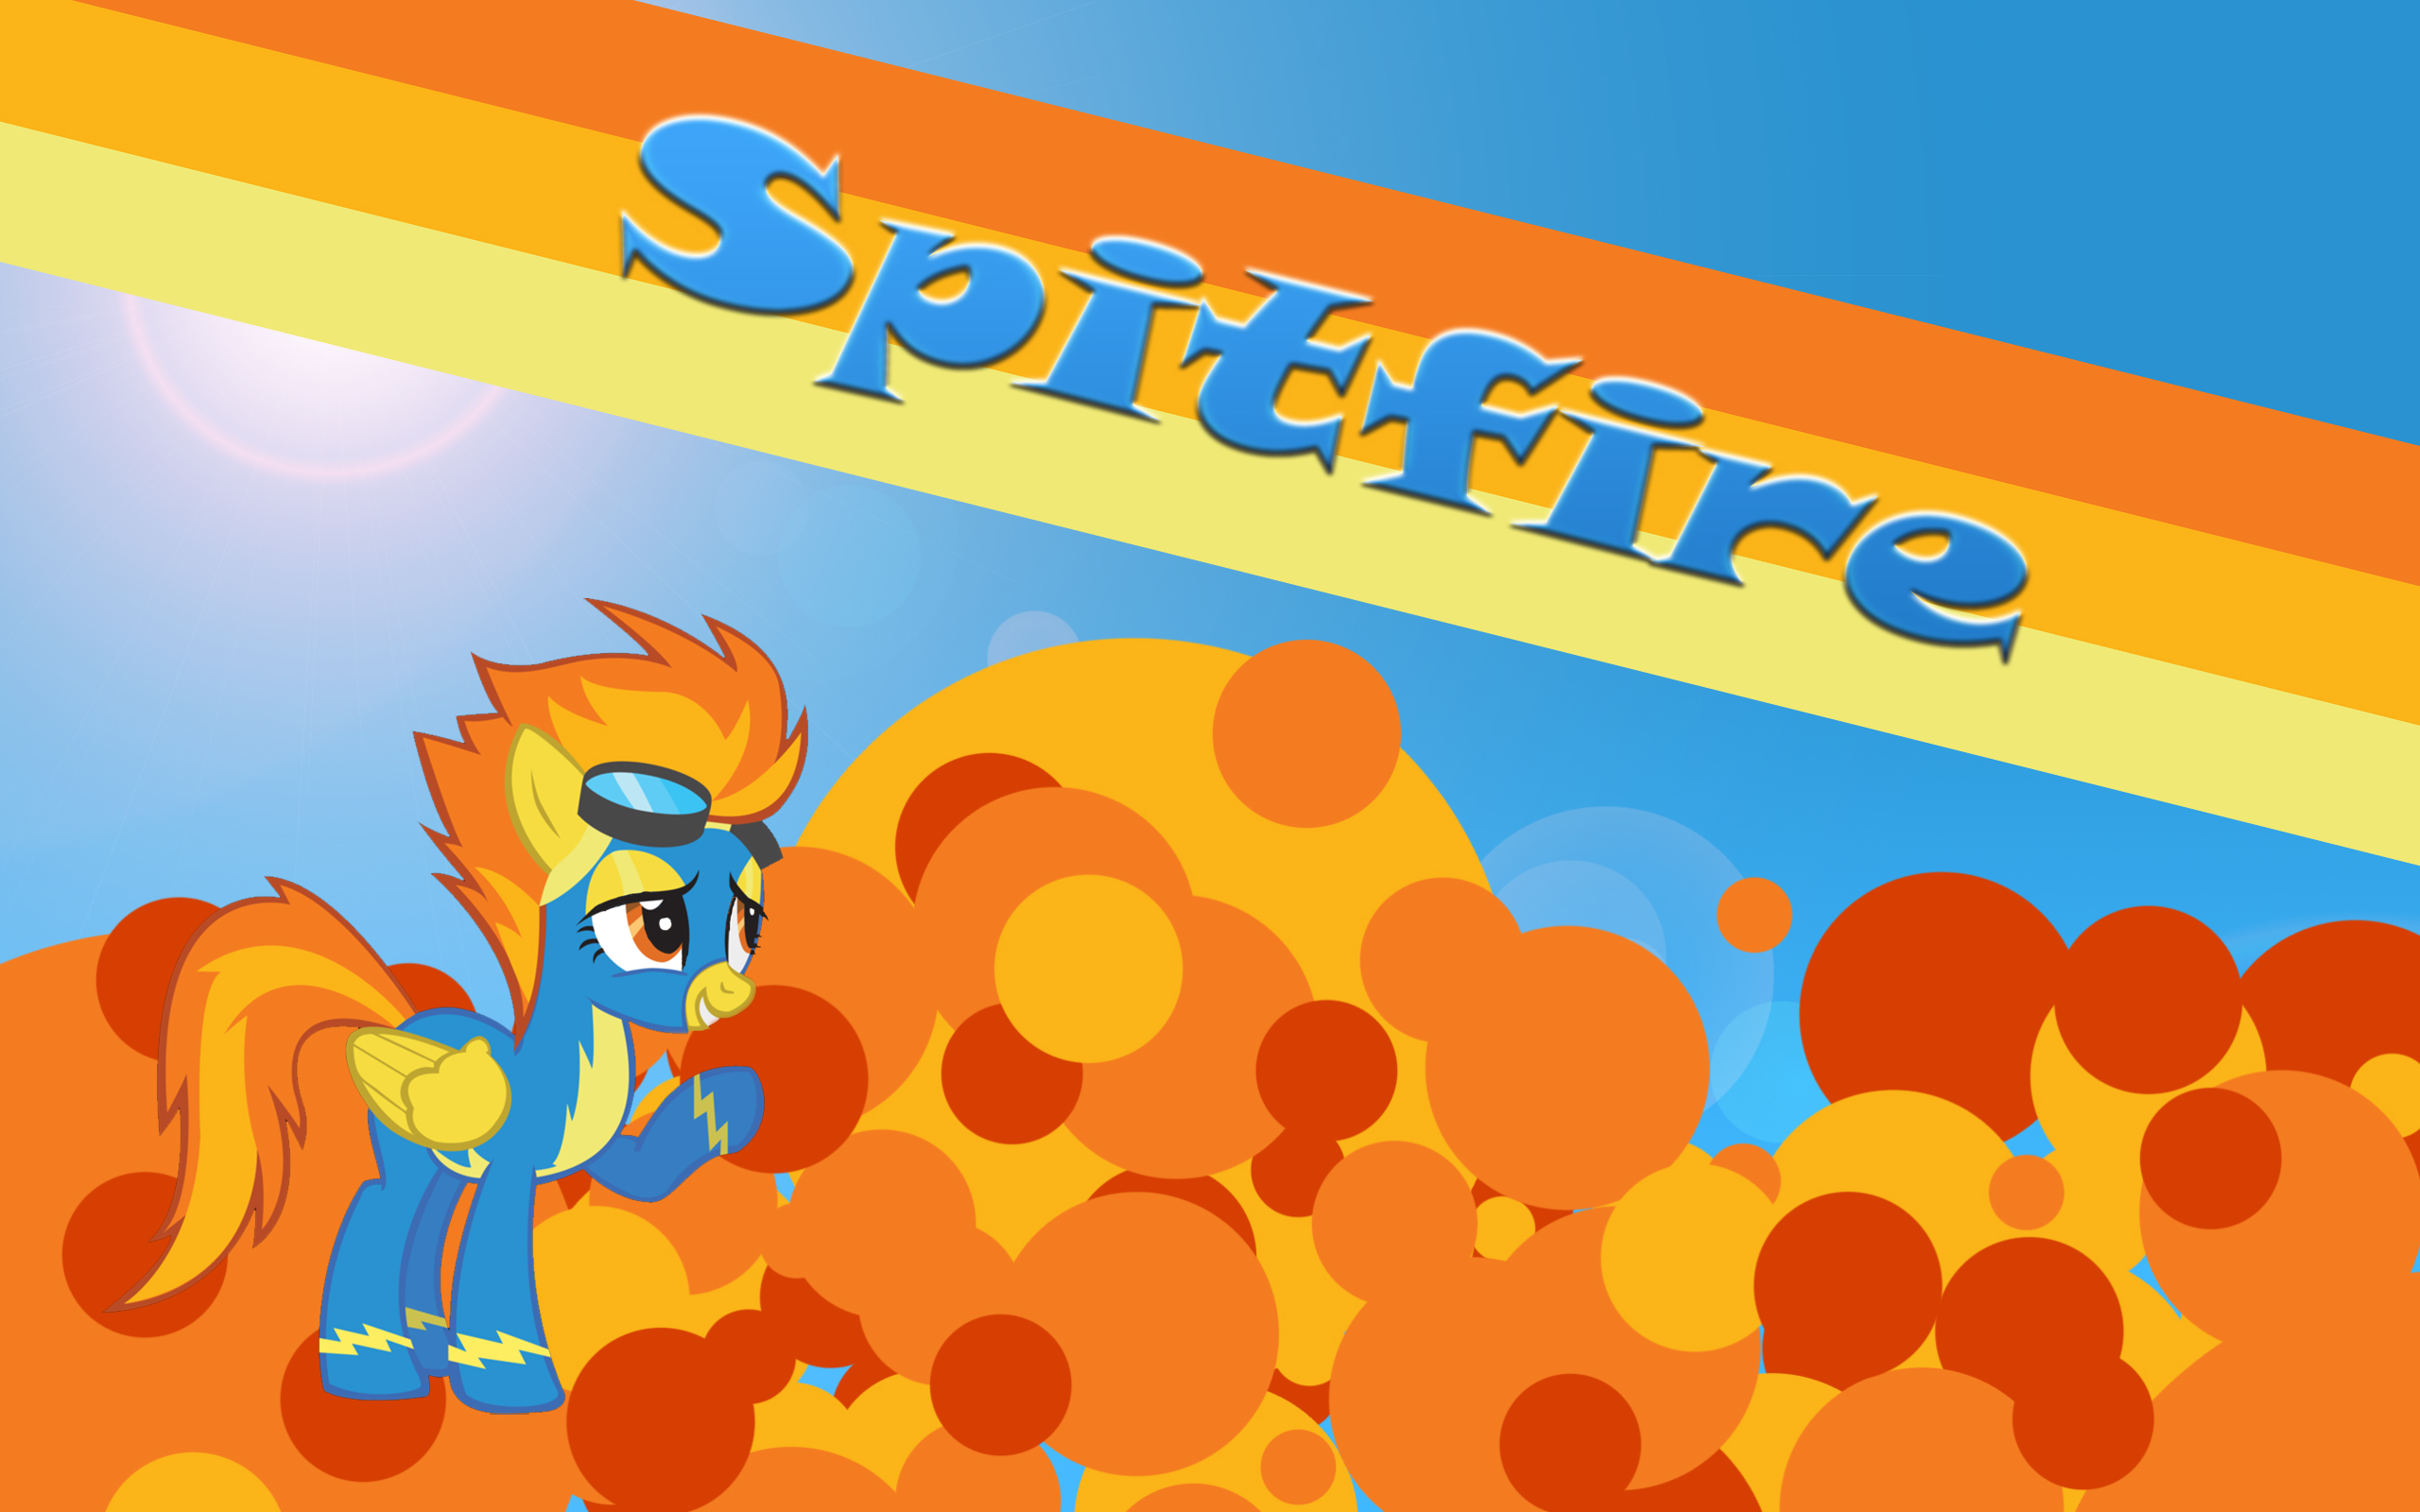 Spitfire Logo Wallpaper images 2560x1600